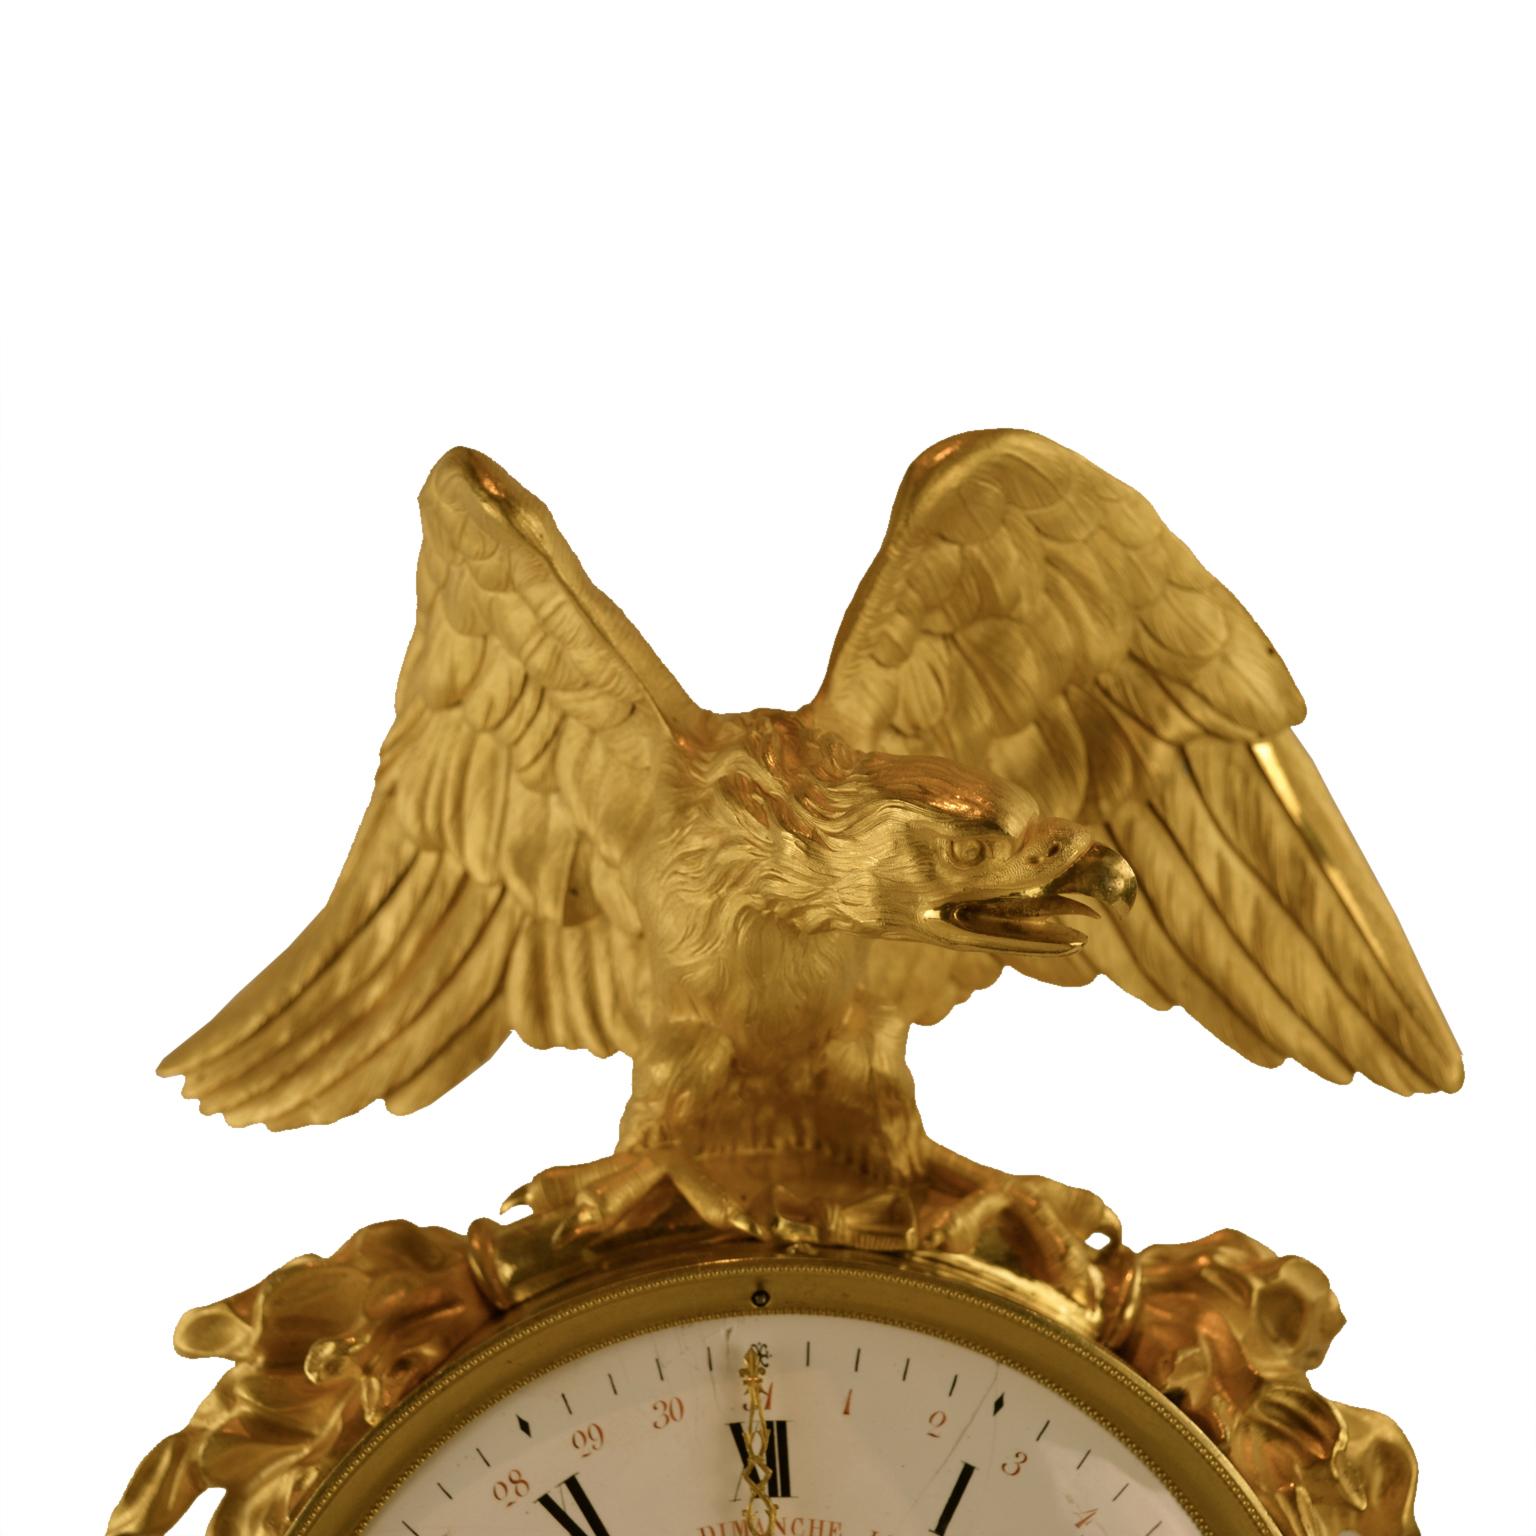 Louis XVI Clock Depicting L’Etude 'Learning' et La Philosophie 'Philosophy' In Good Condition For Sale In Vancouver, British Columbia